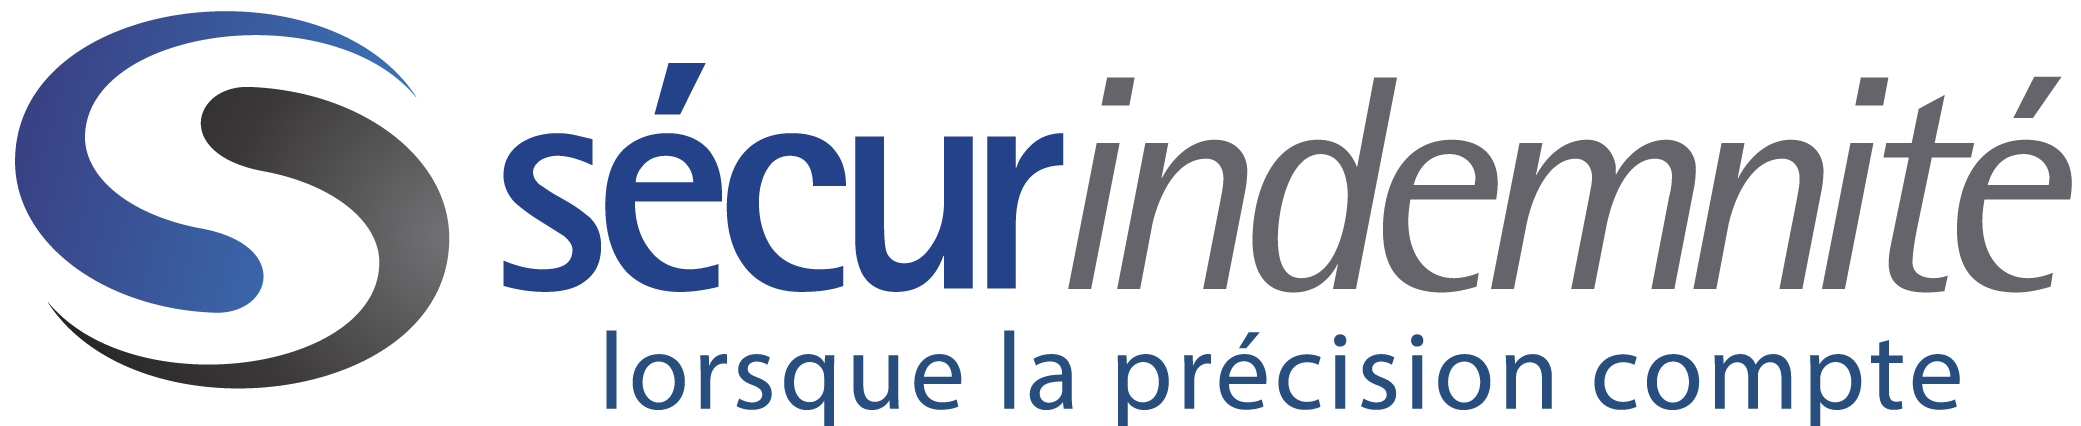 New CS logo with Slogan FR